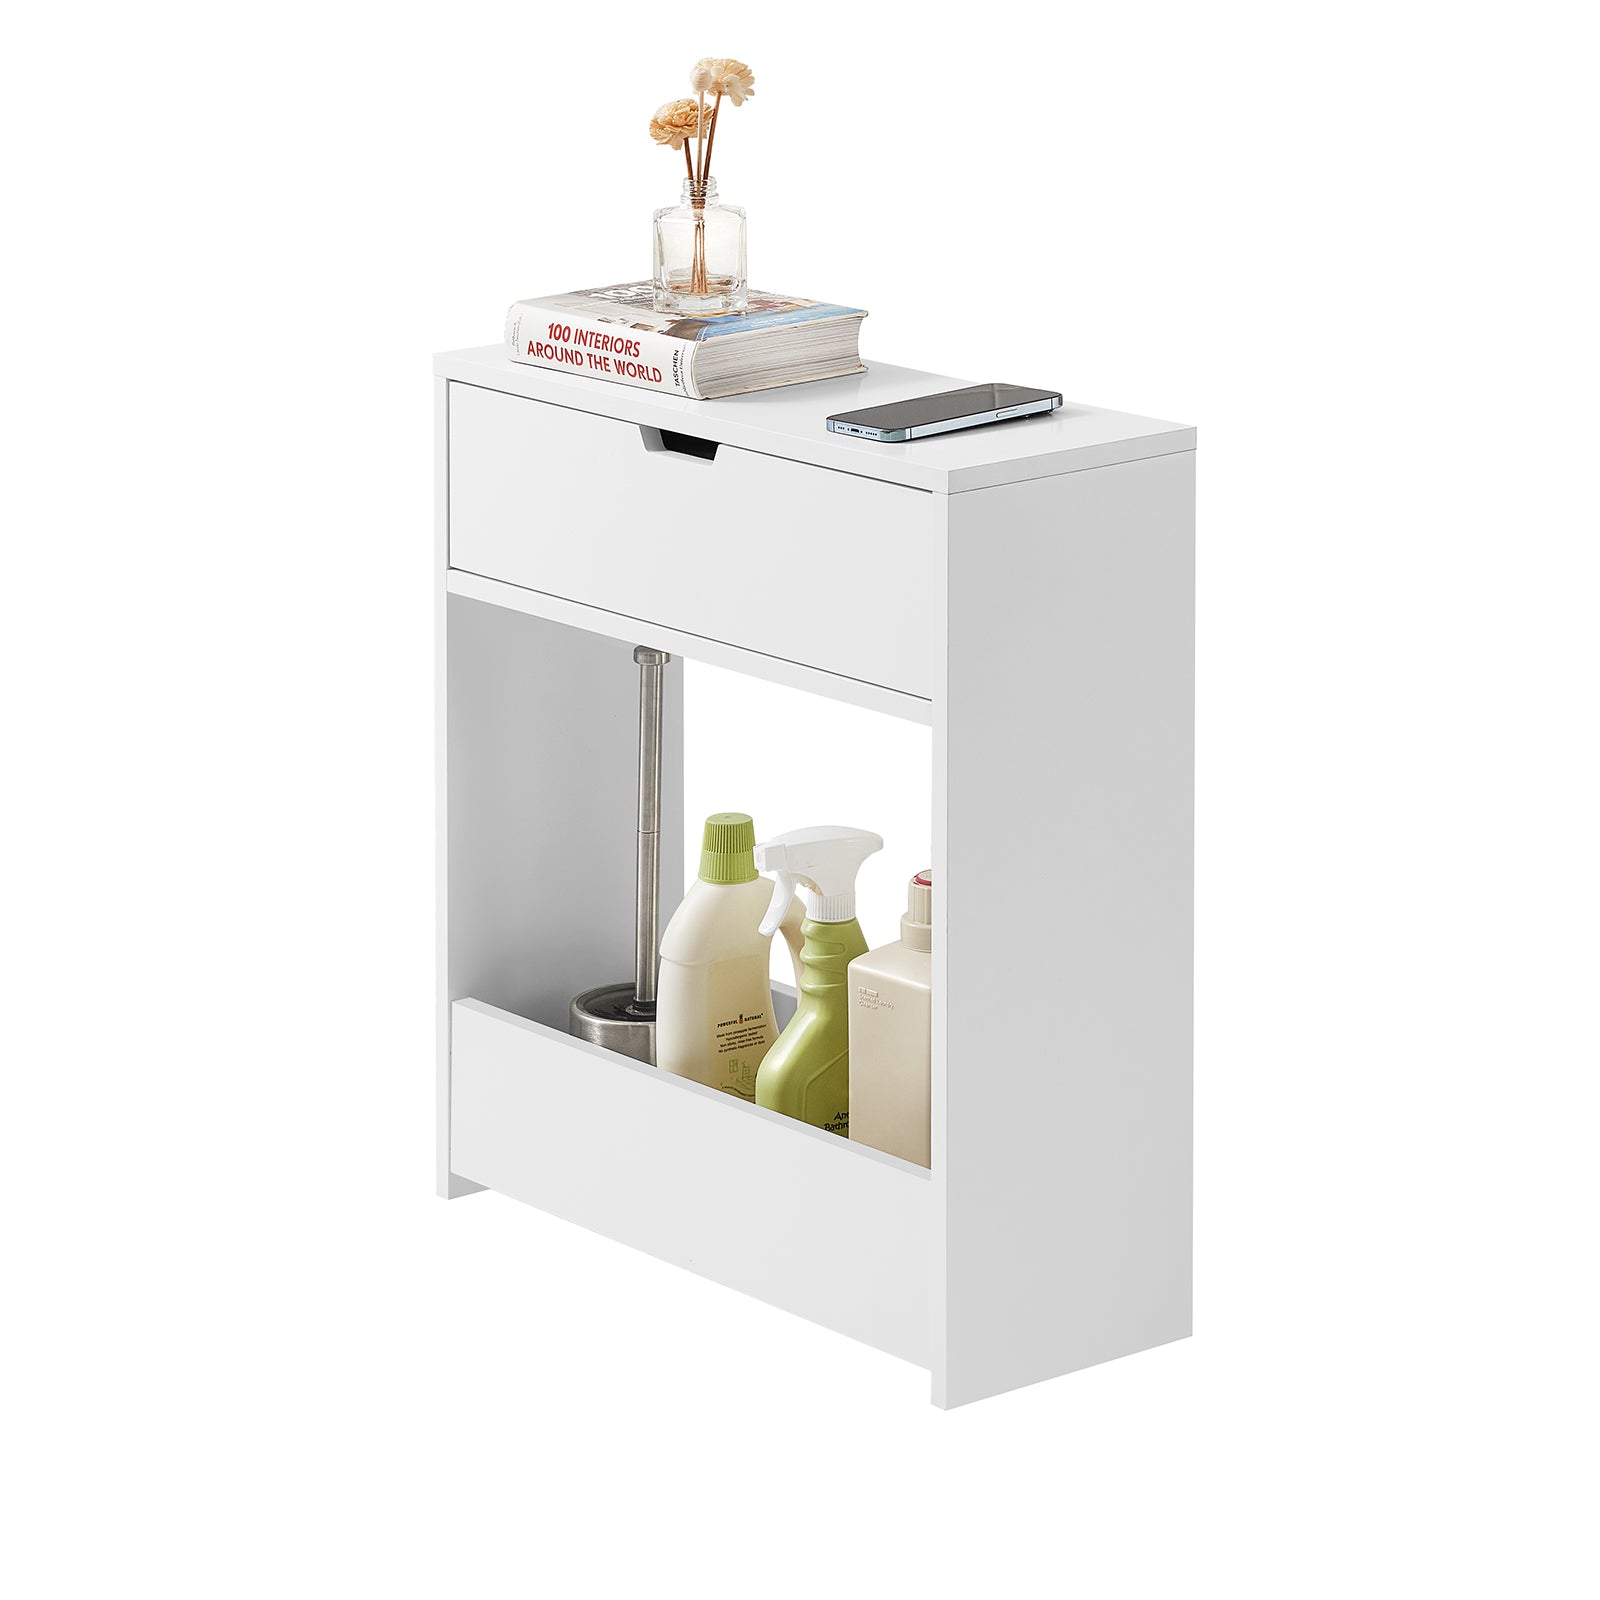 SoBuy BZR48-W, Bathroom Toilet Paper Roll Holder, Bathroom Shelf Narrow Shelf Storage Cabinet